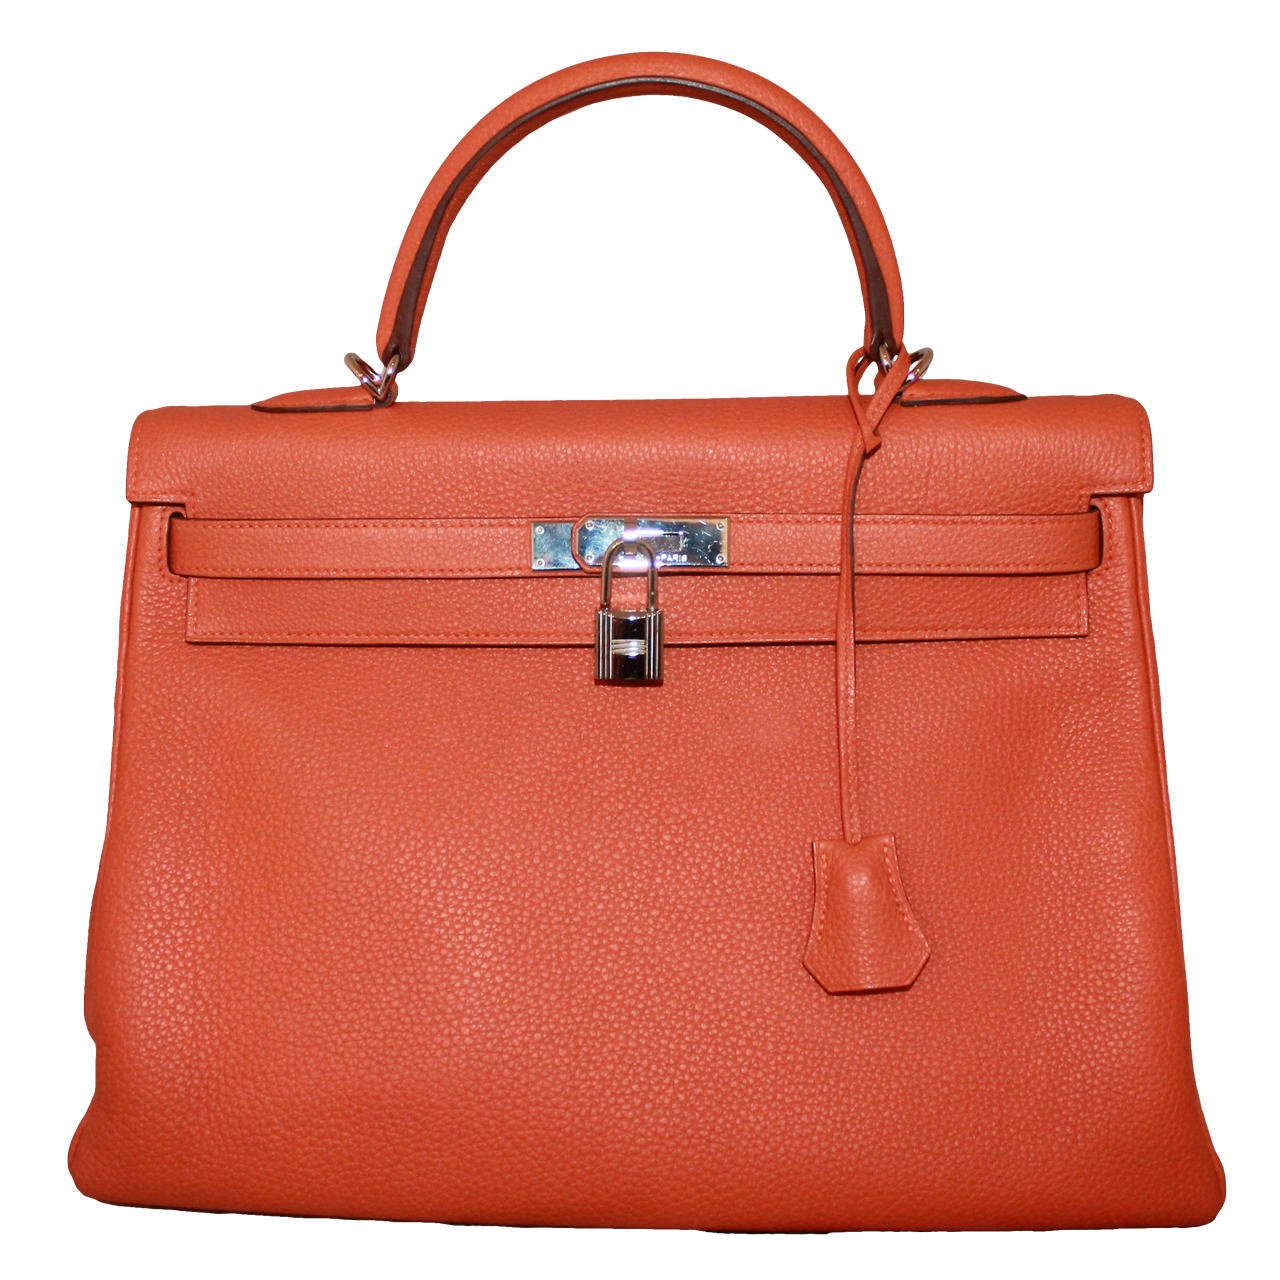 Hermes Orange Leather Kelly Handbag SHW - circa 2012